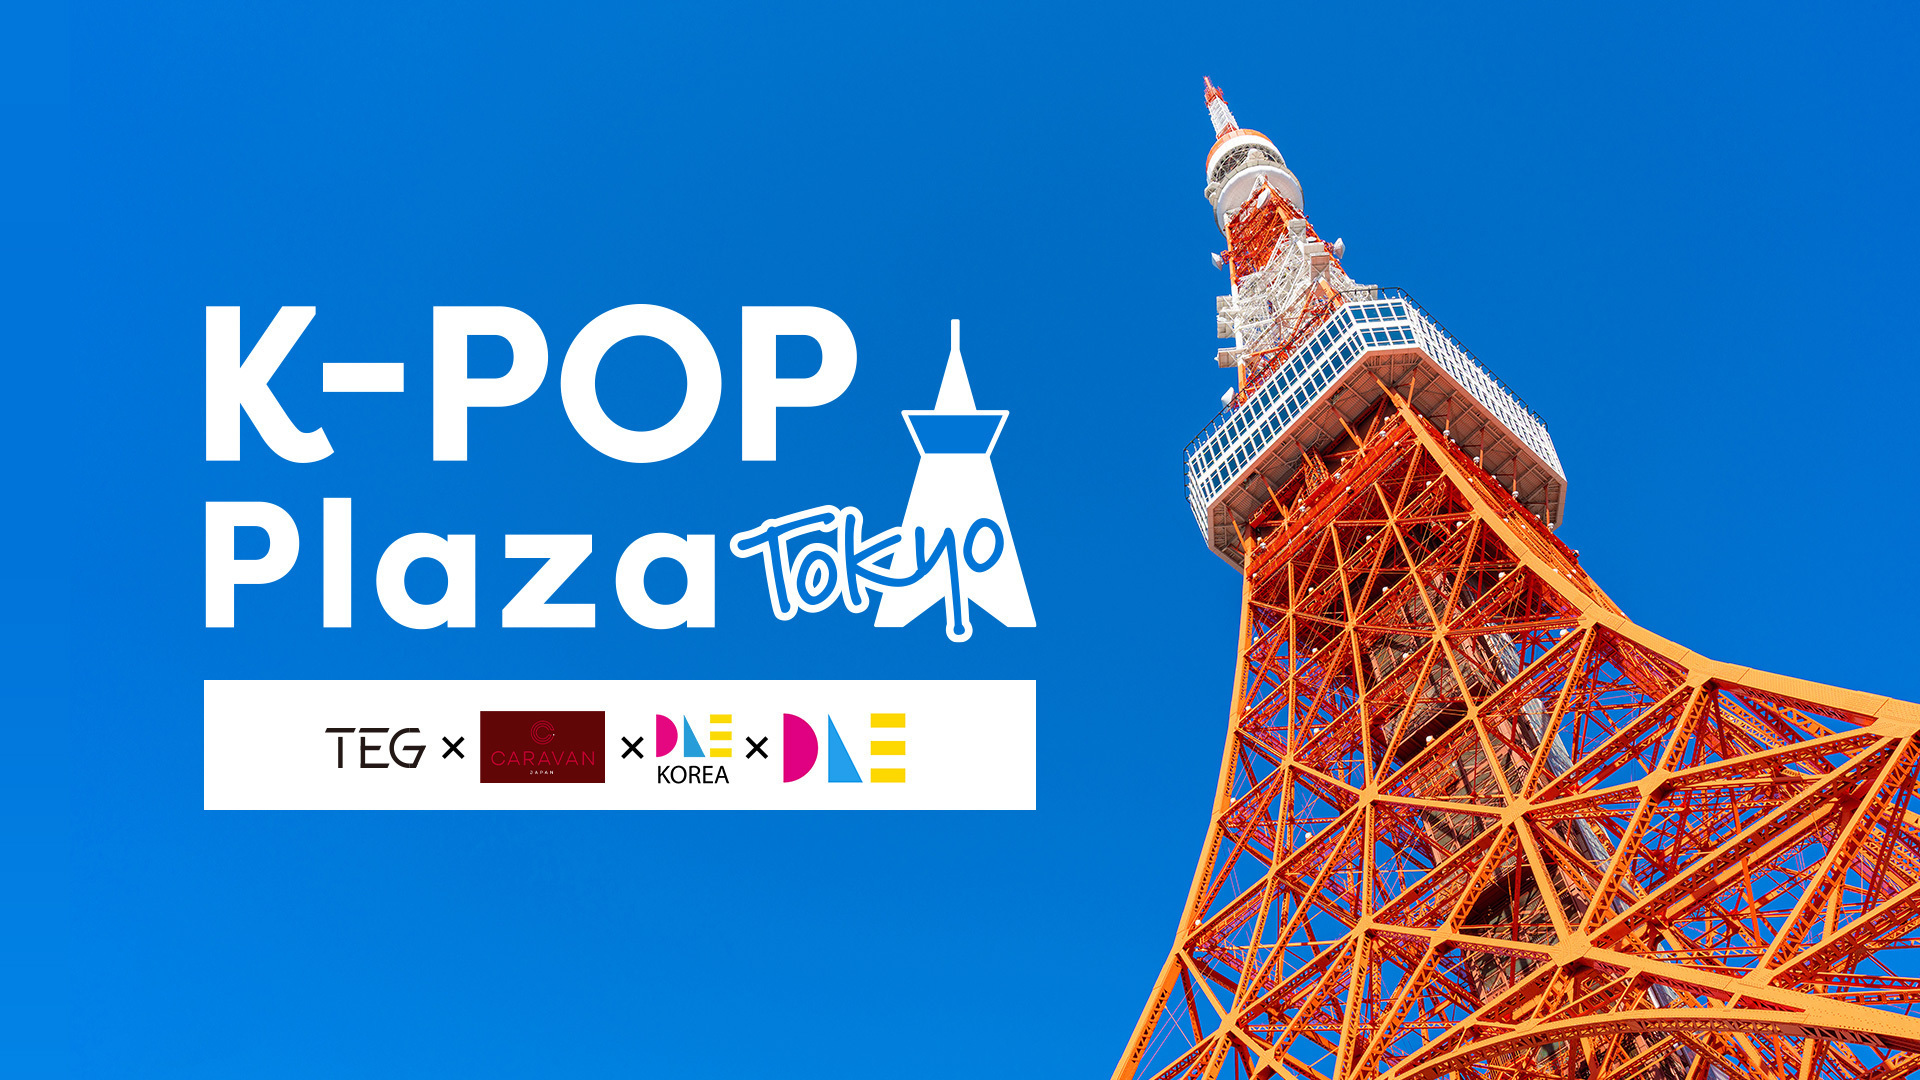 K-POP Plaza Tokyo